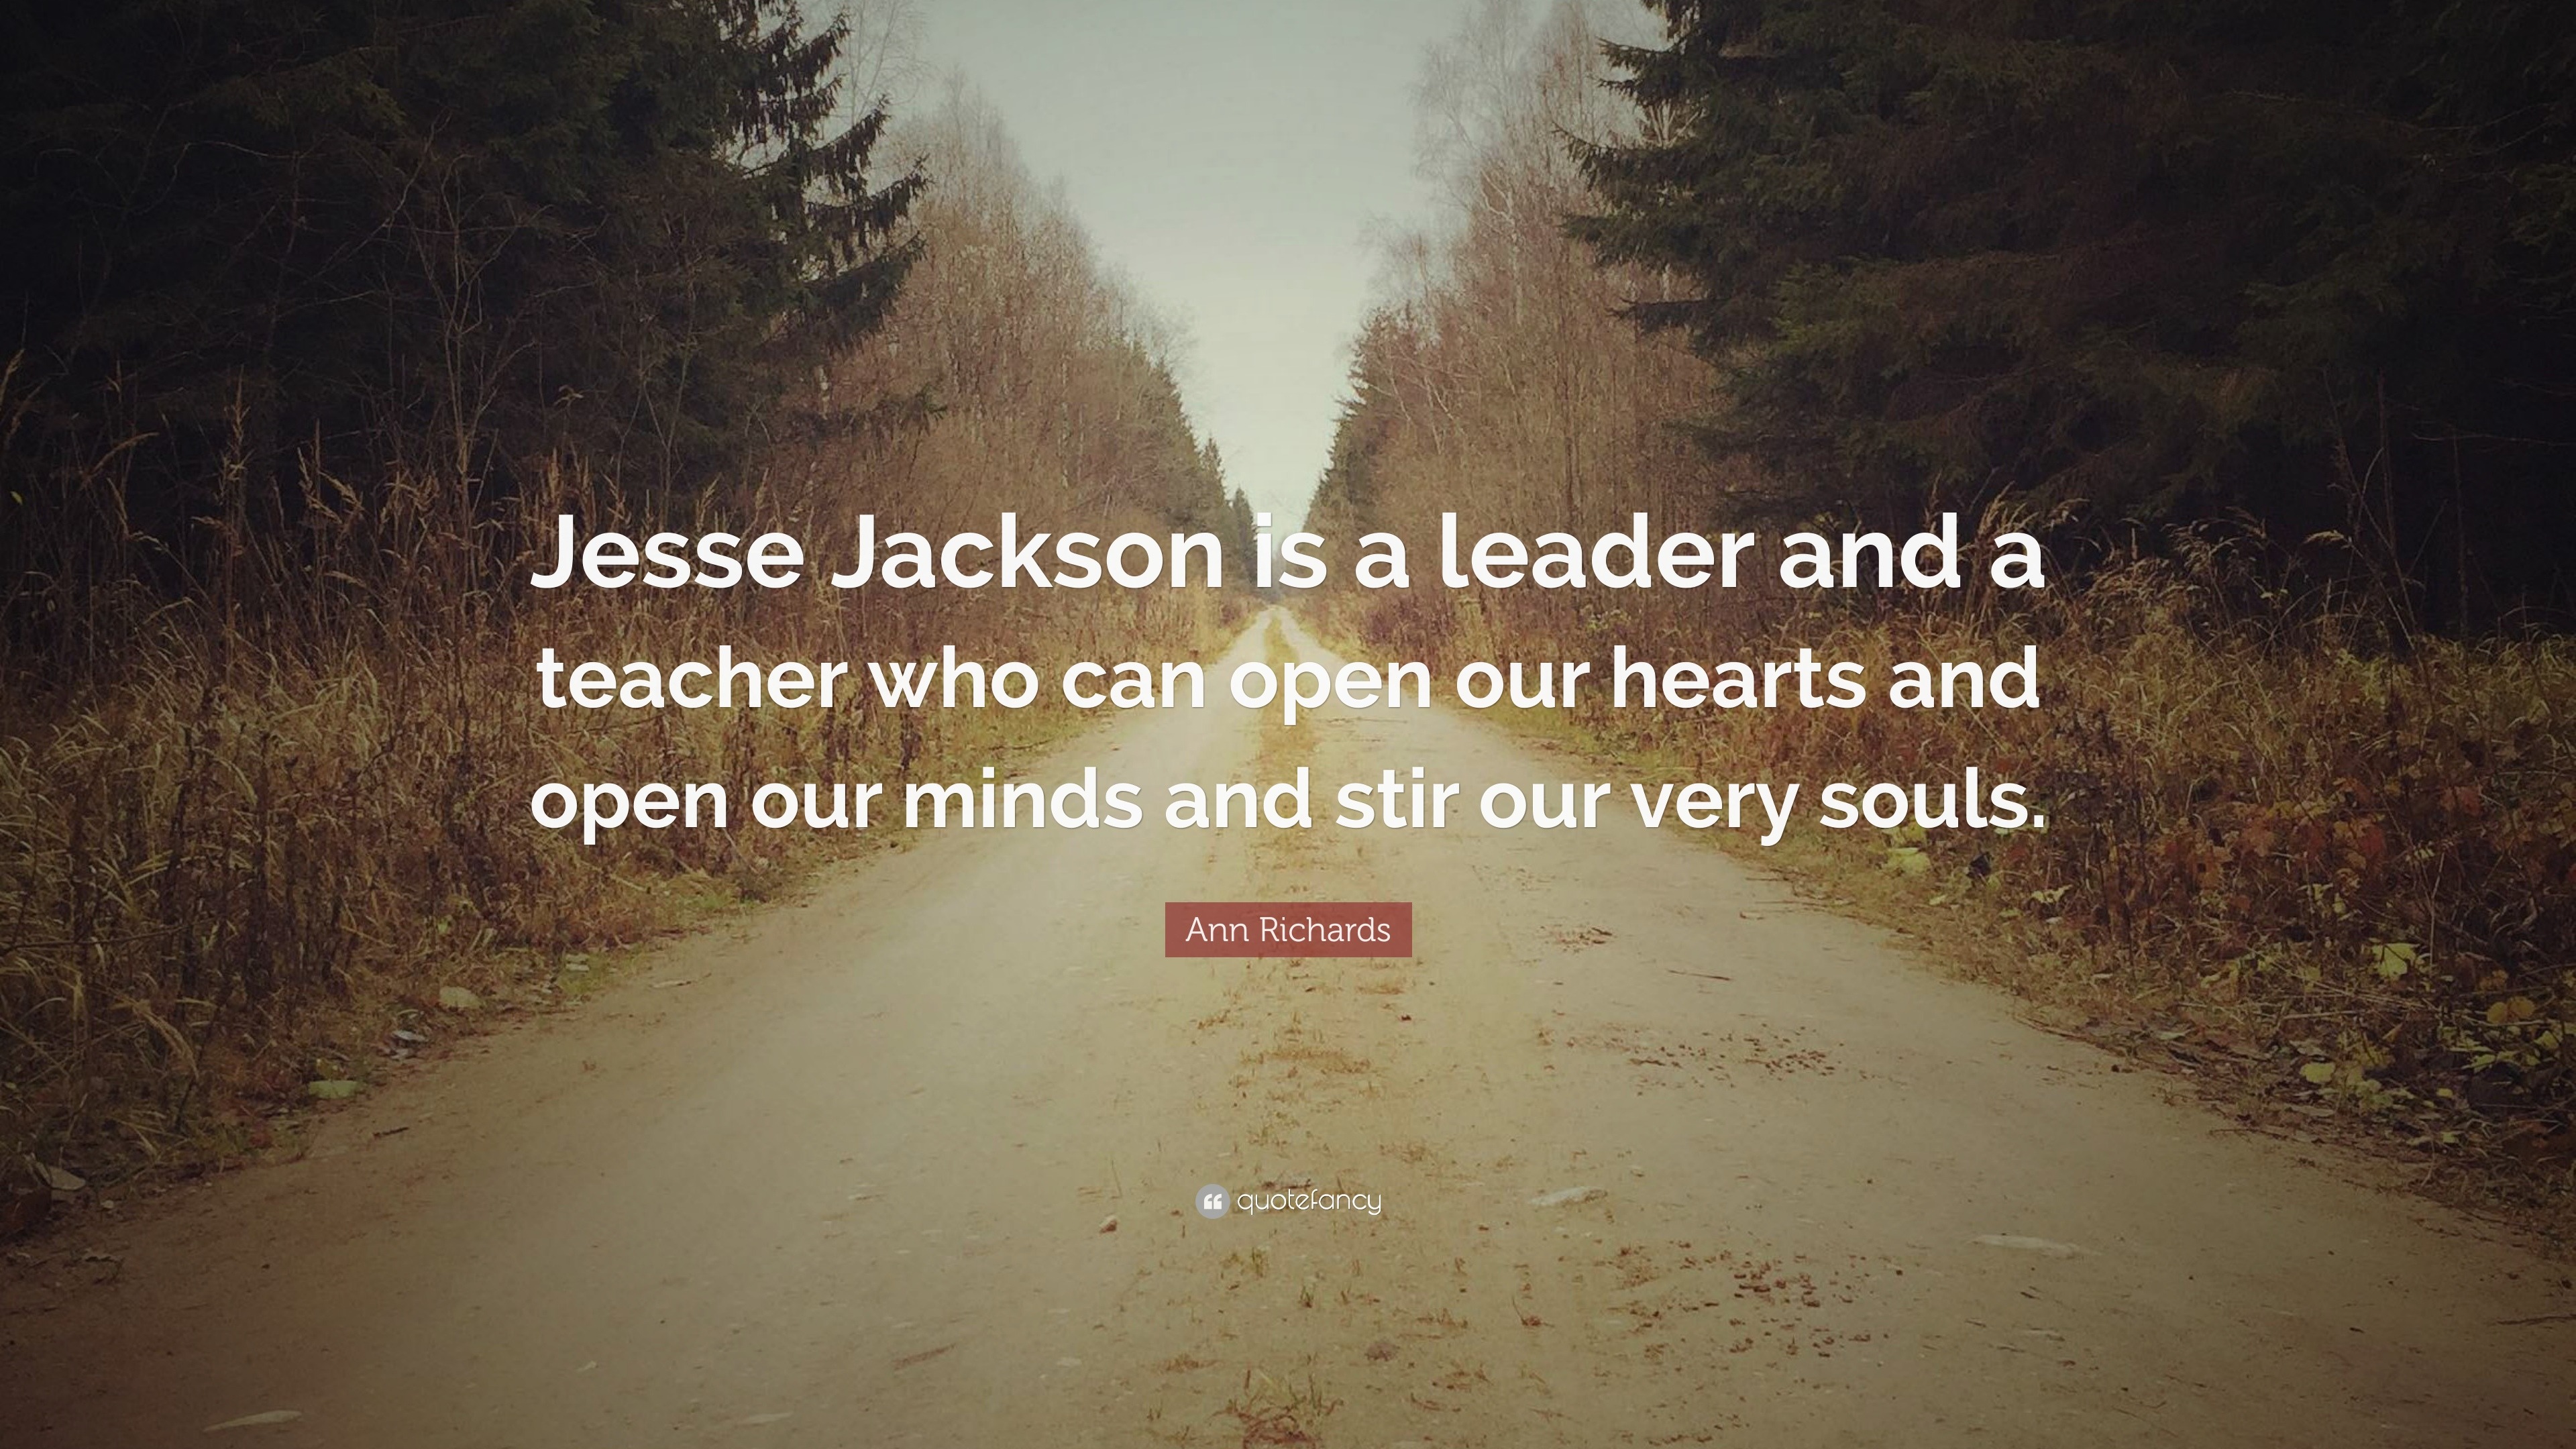 Ann Richards Quote: “Jesse Jackson is a